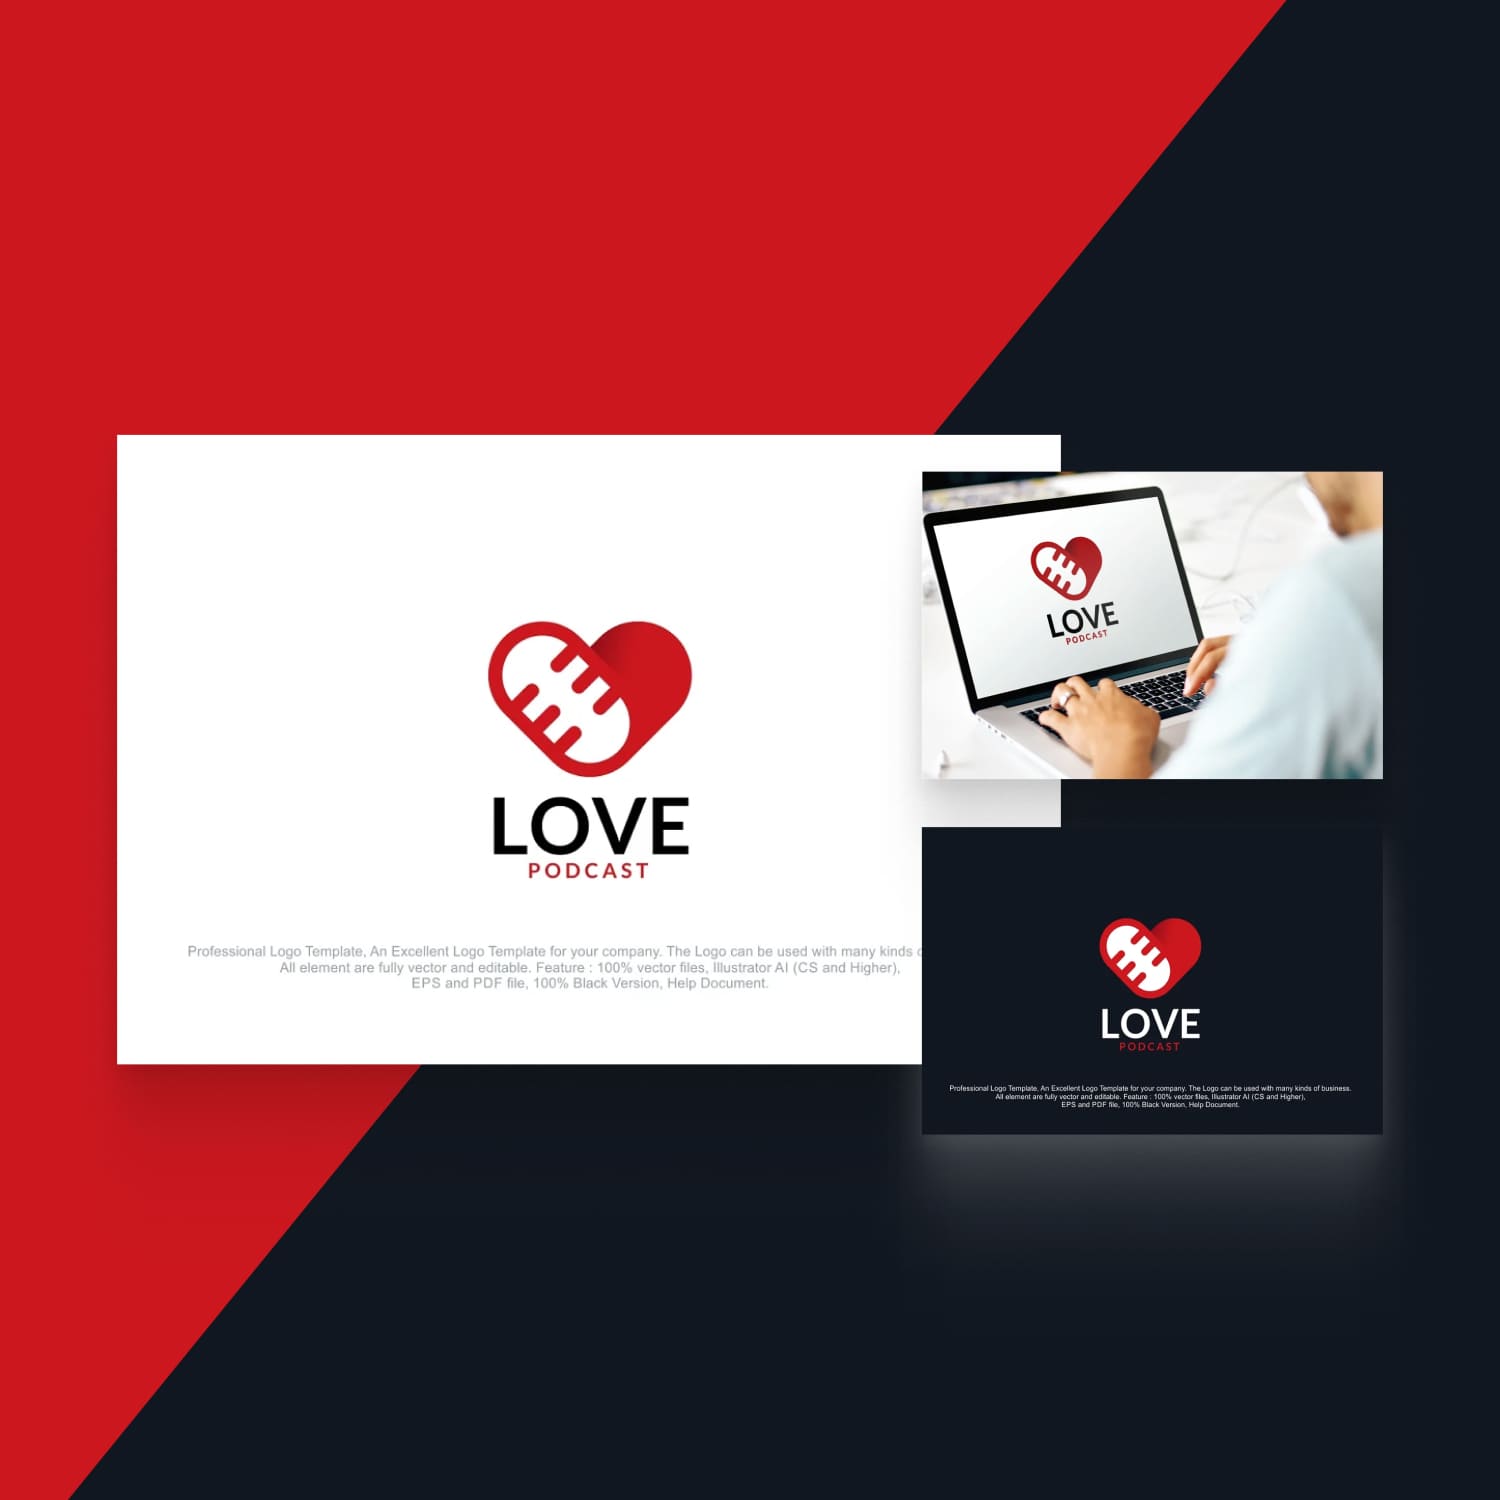 Love Podcast - Romantic Radio Logo cover.